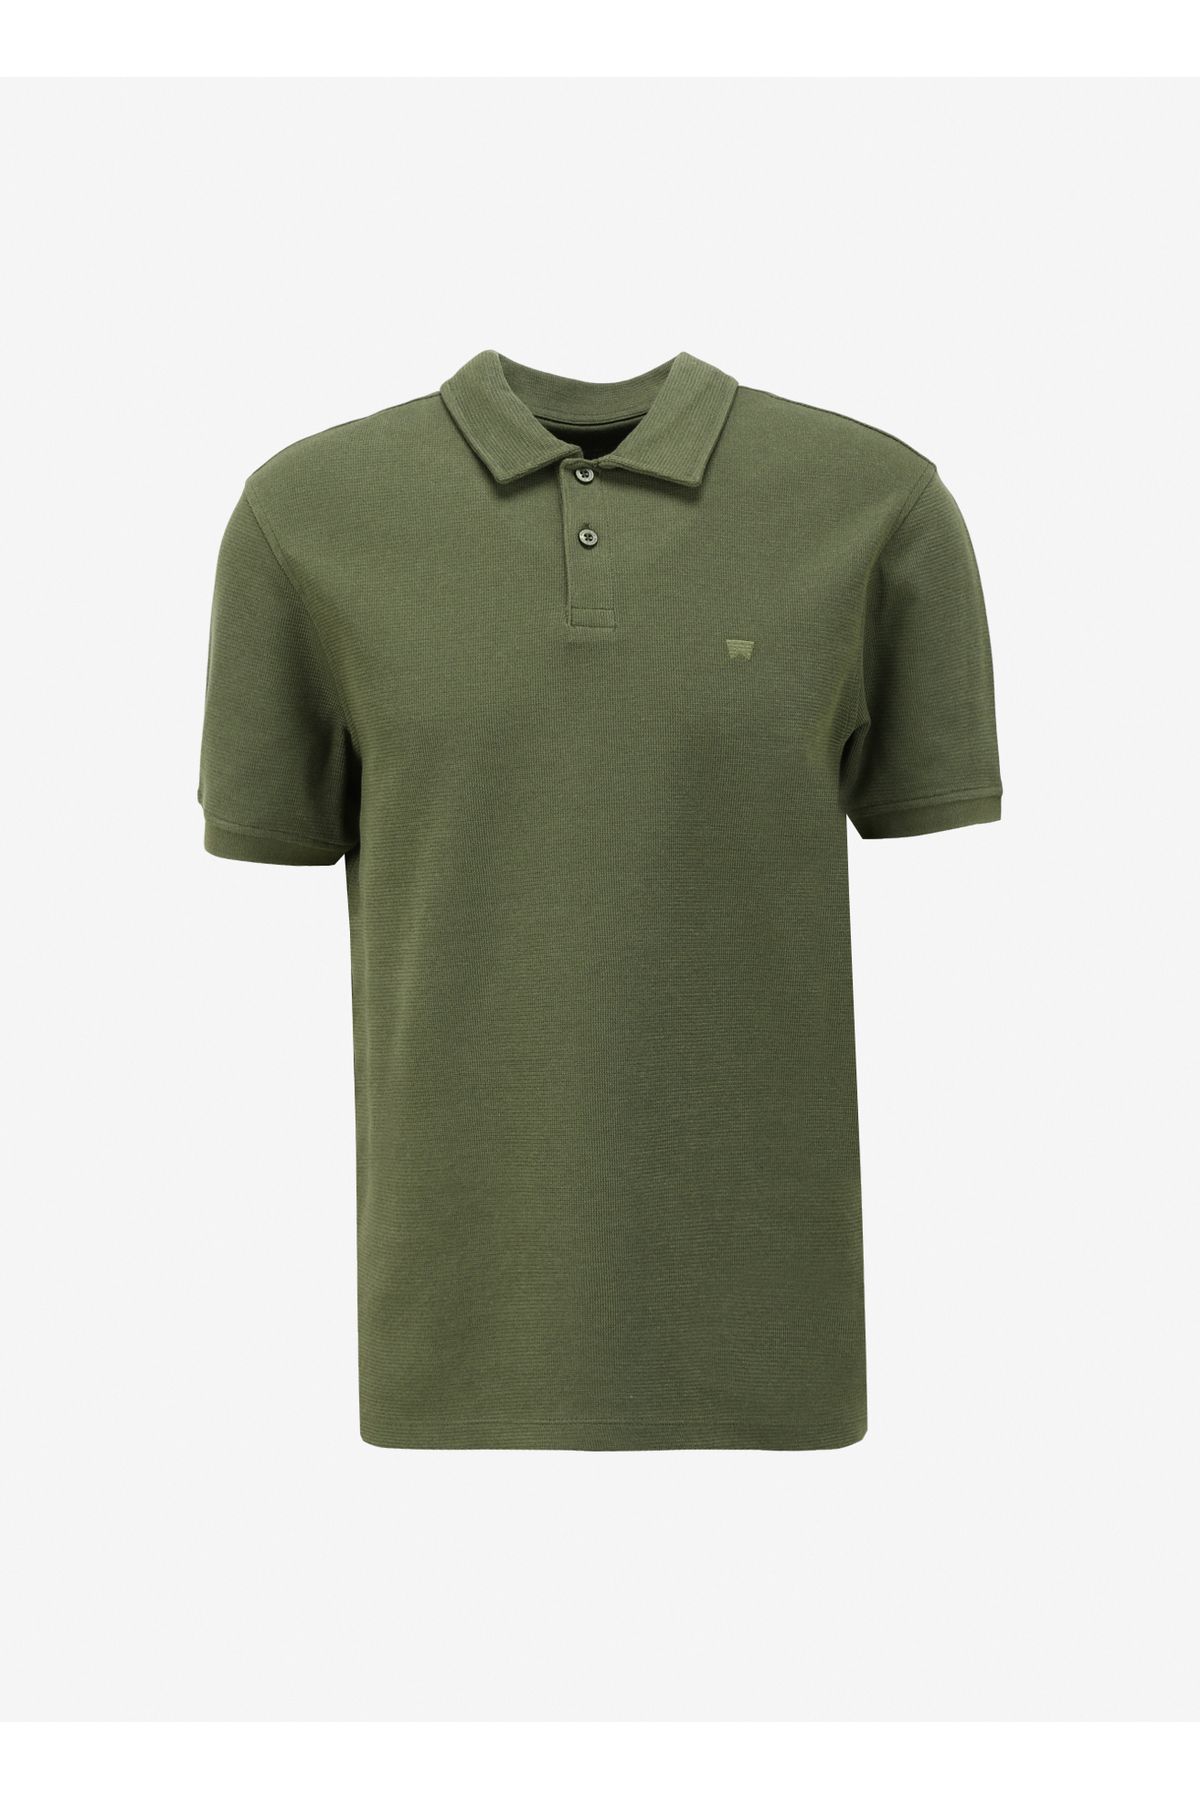 Wrangler تی شرت چوگان مردان سبز روغن W241557308 آستین کوتاه